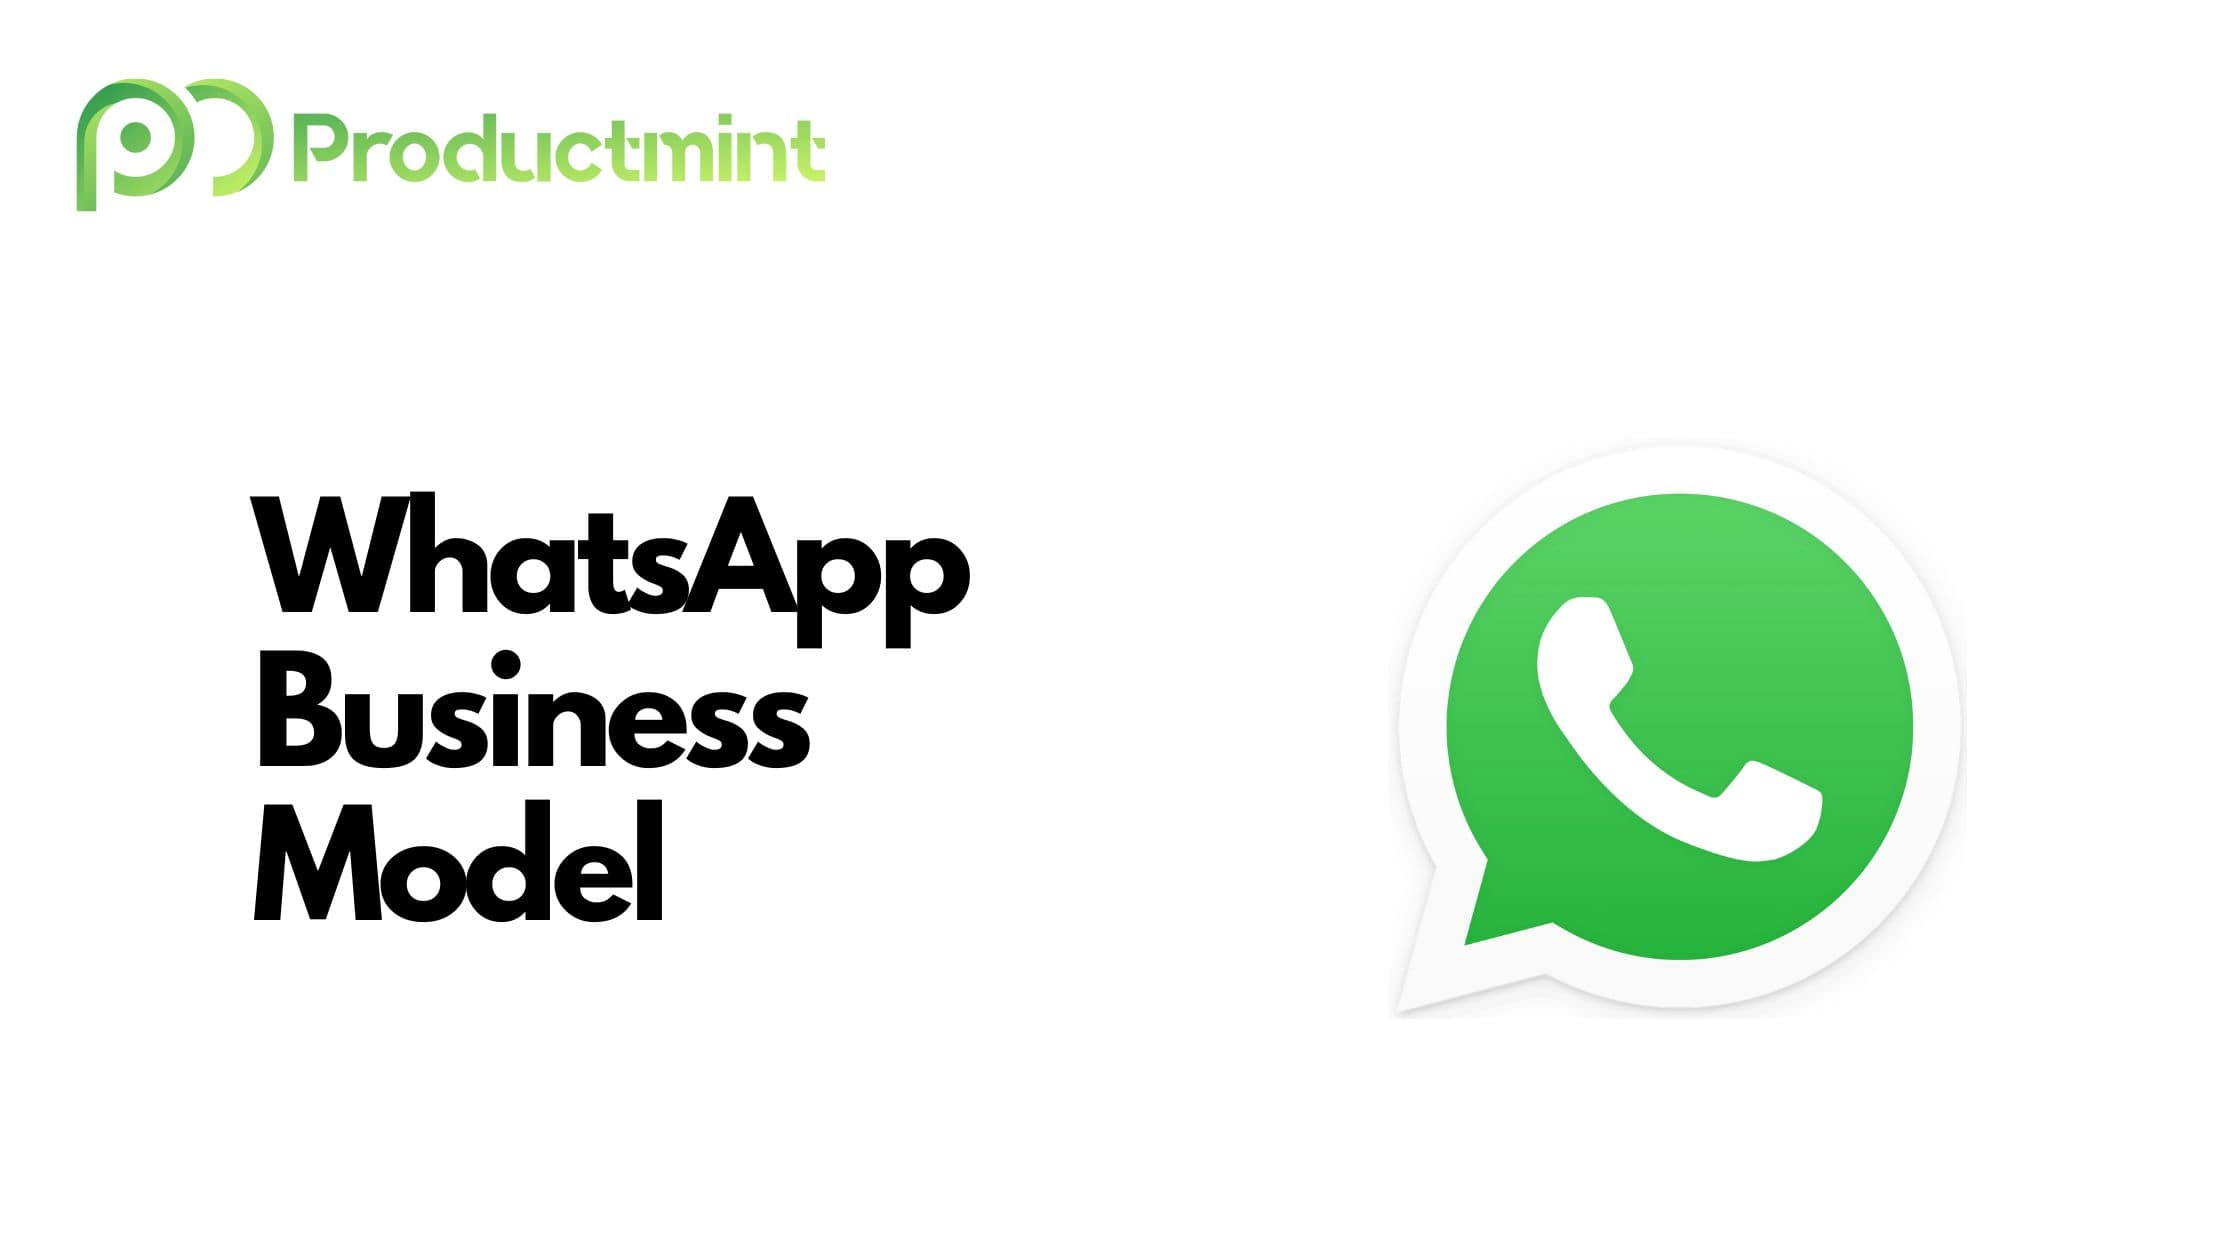 WhatsApp Business Model